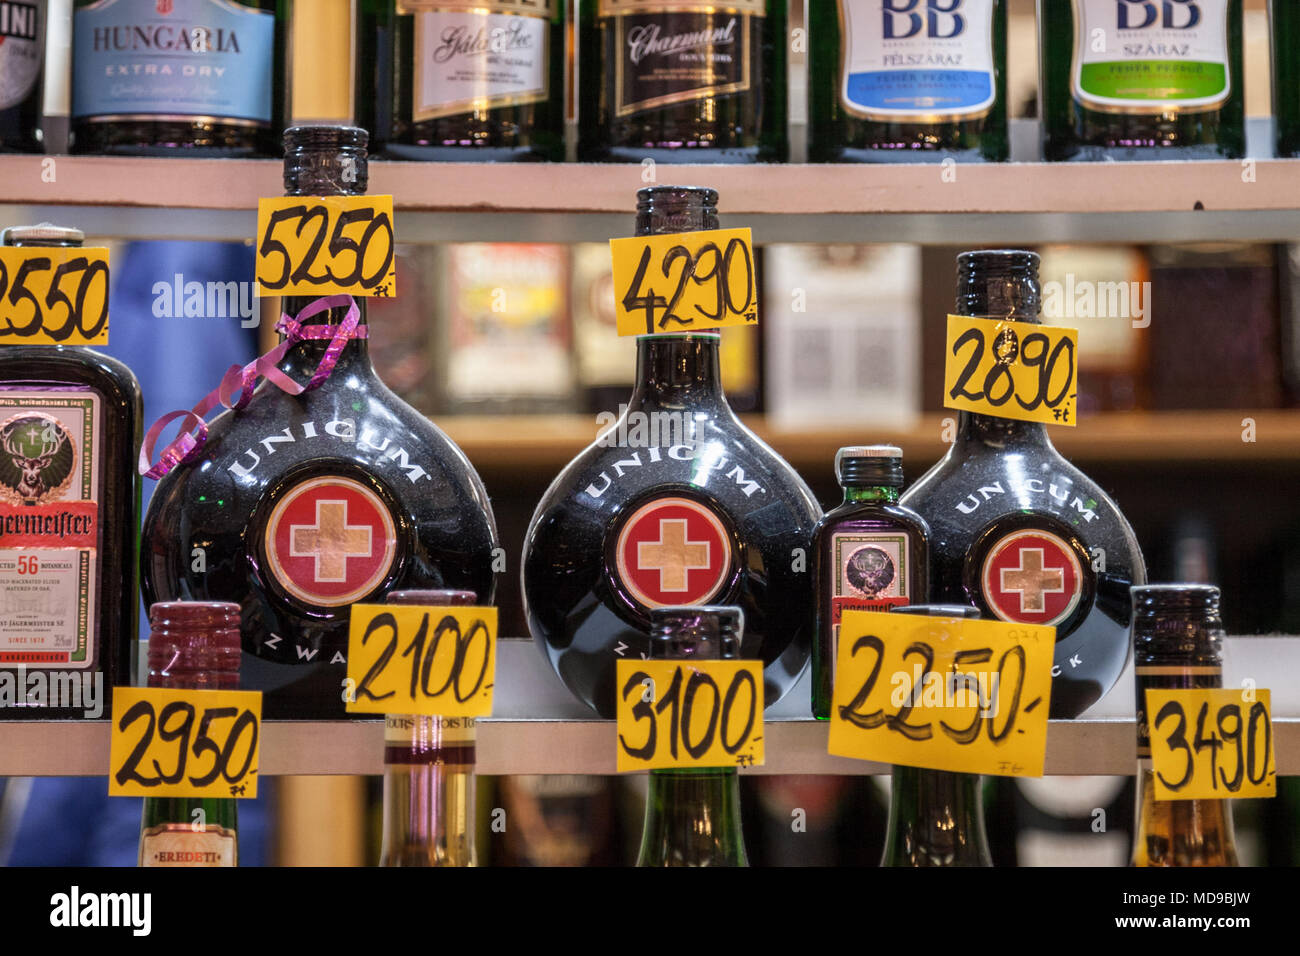 BUDAPEST, Ungheria - 6 Aprile 2018: Unicum di bottiglie per la vendita su un mercato ungherese. Unicum Zwack è uno di Ungheria più famosa immagine di liquore di Unicum Foto Stock